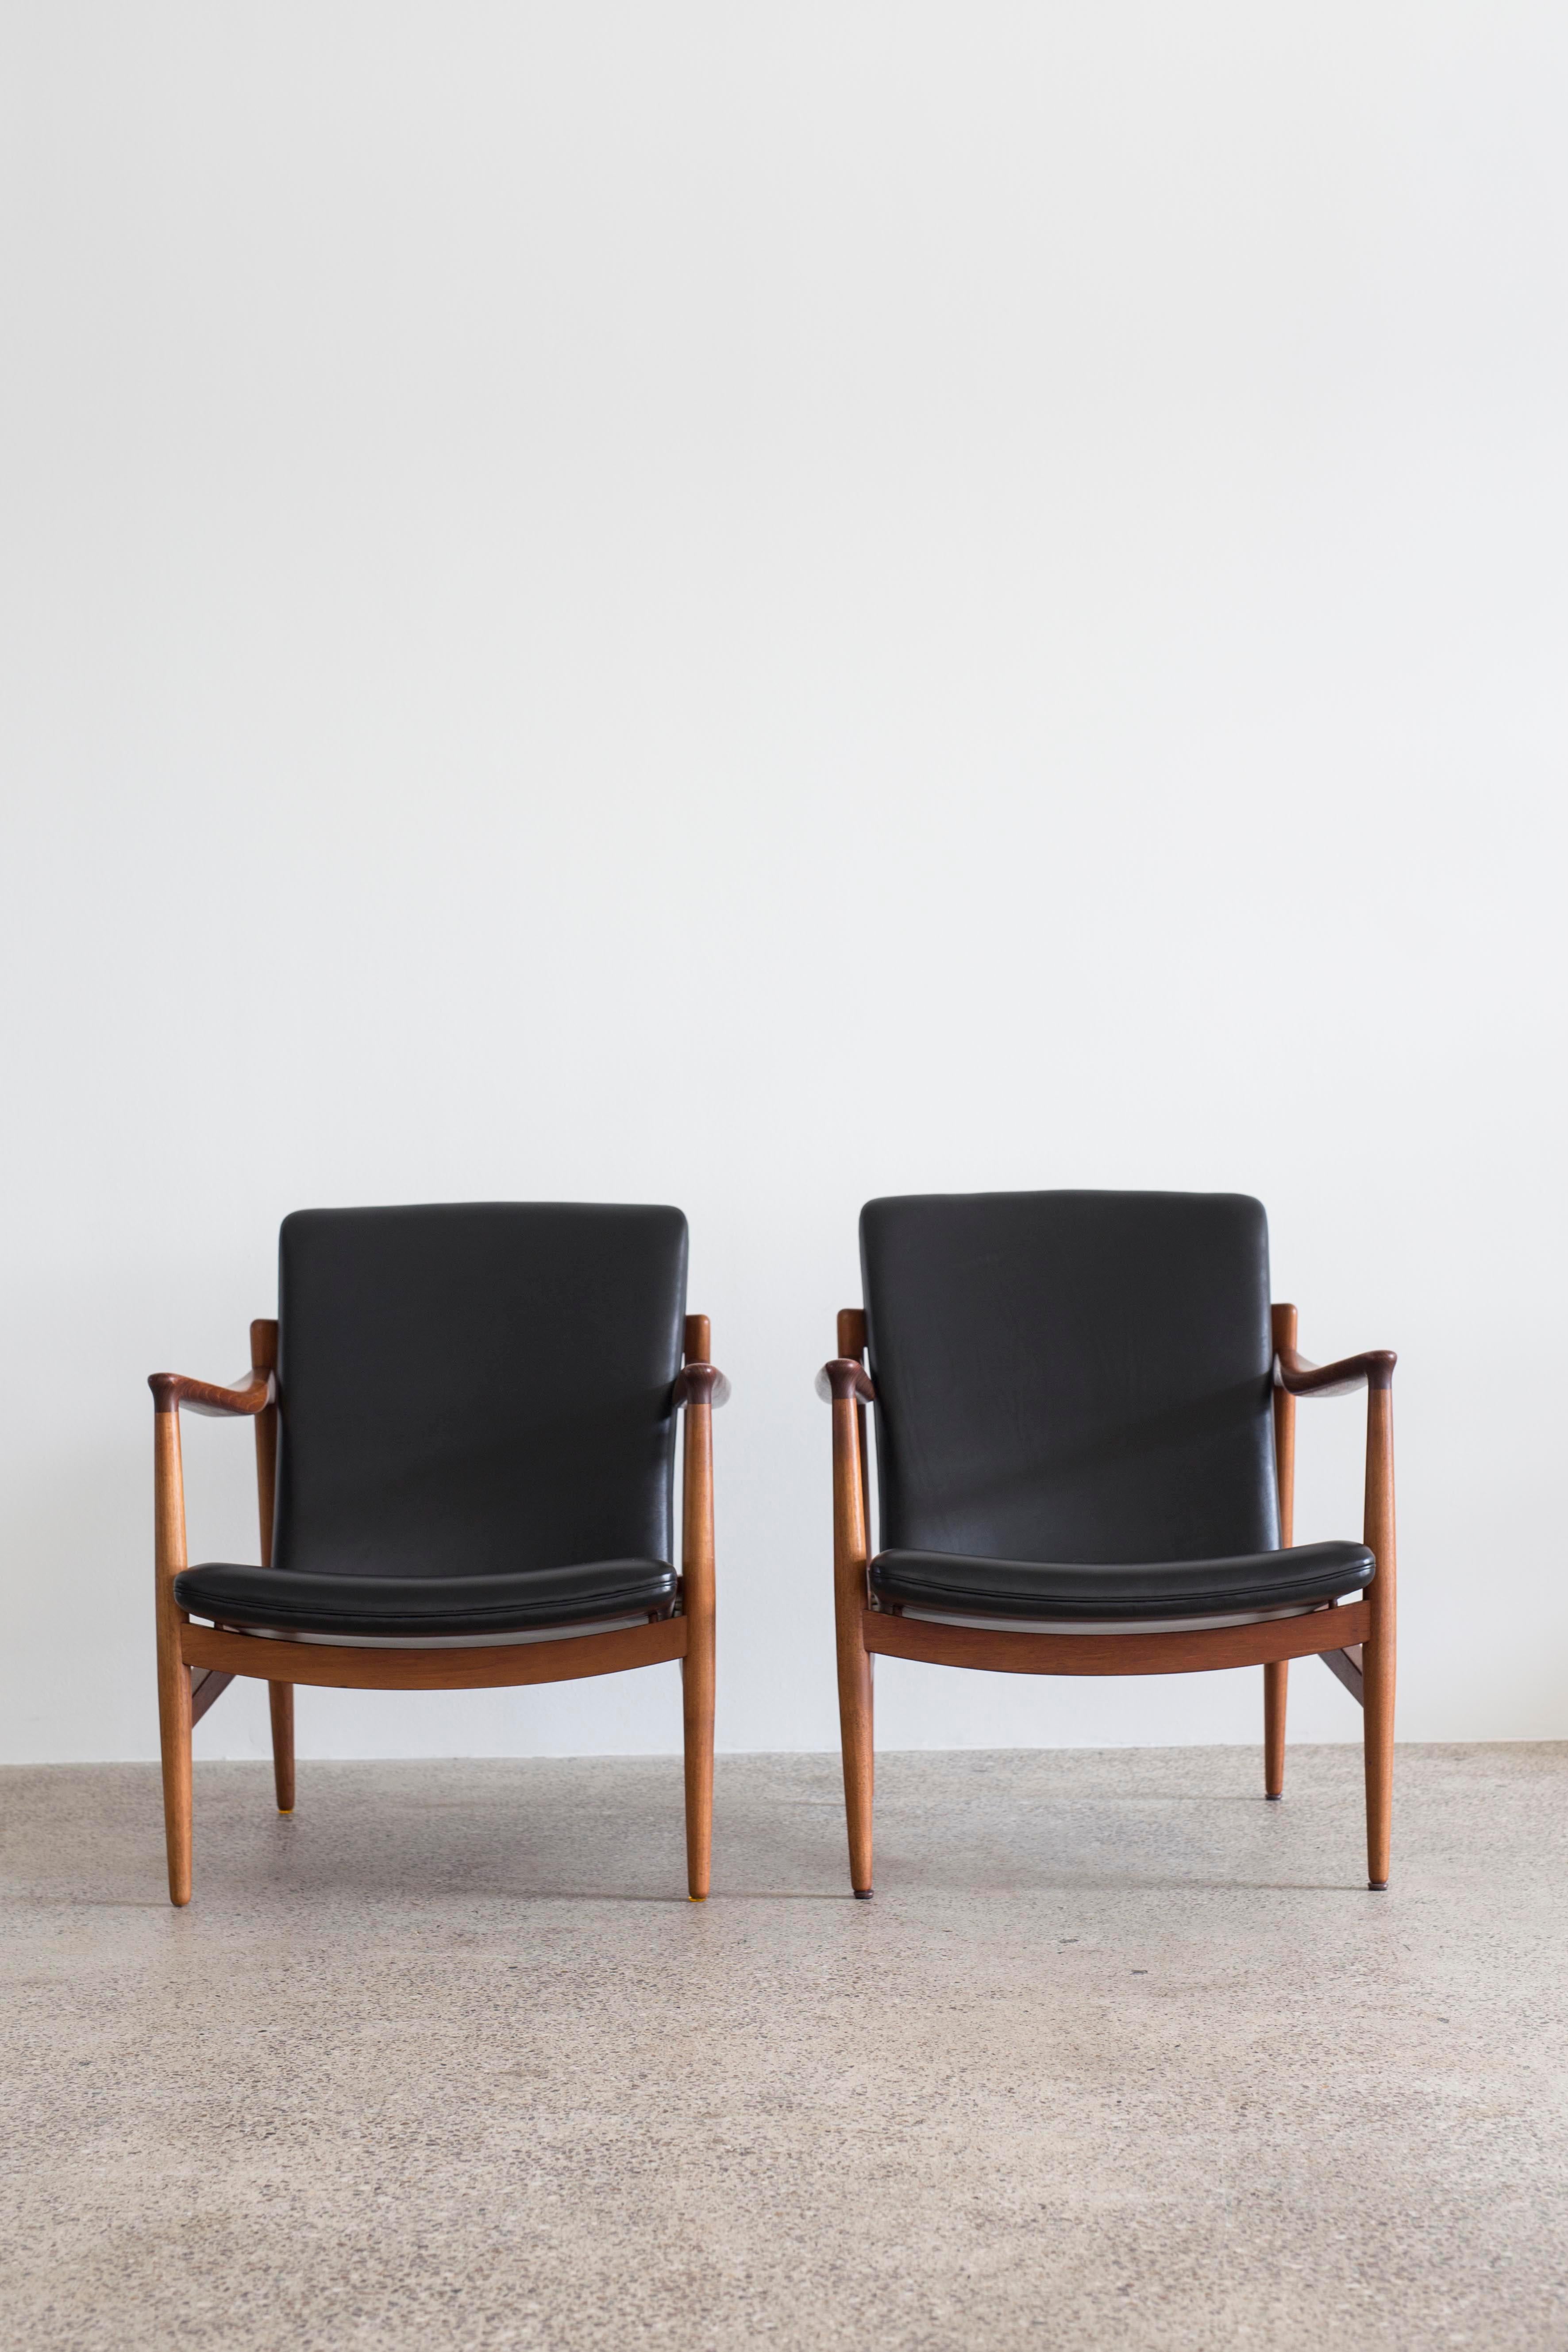 Danish Pair of Jacob Kjaer Easy Chairs, 1954